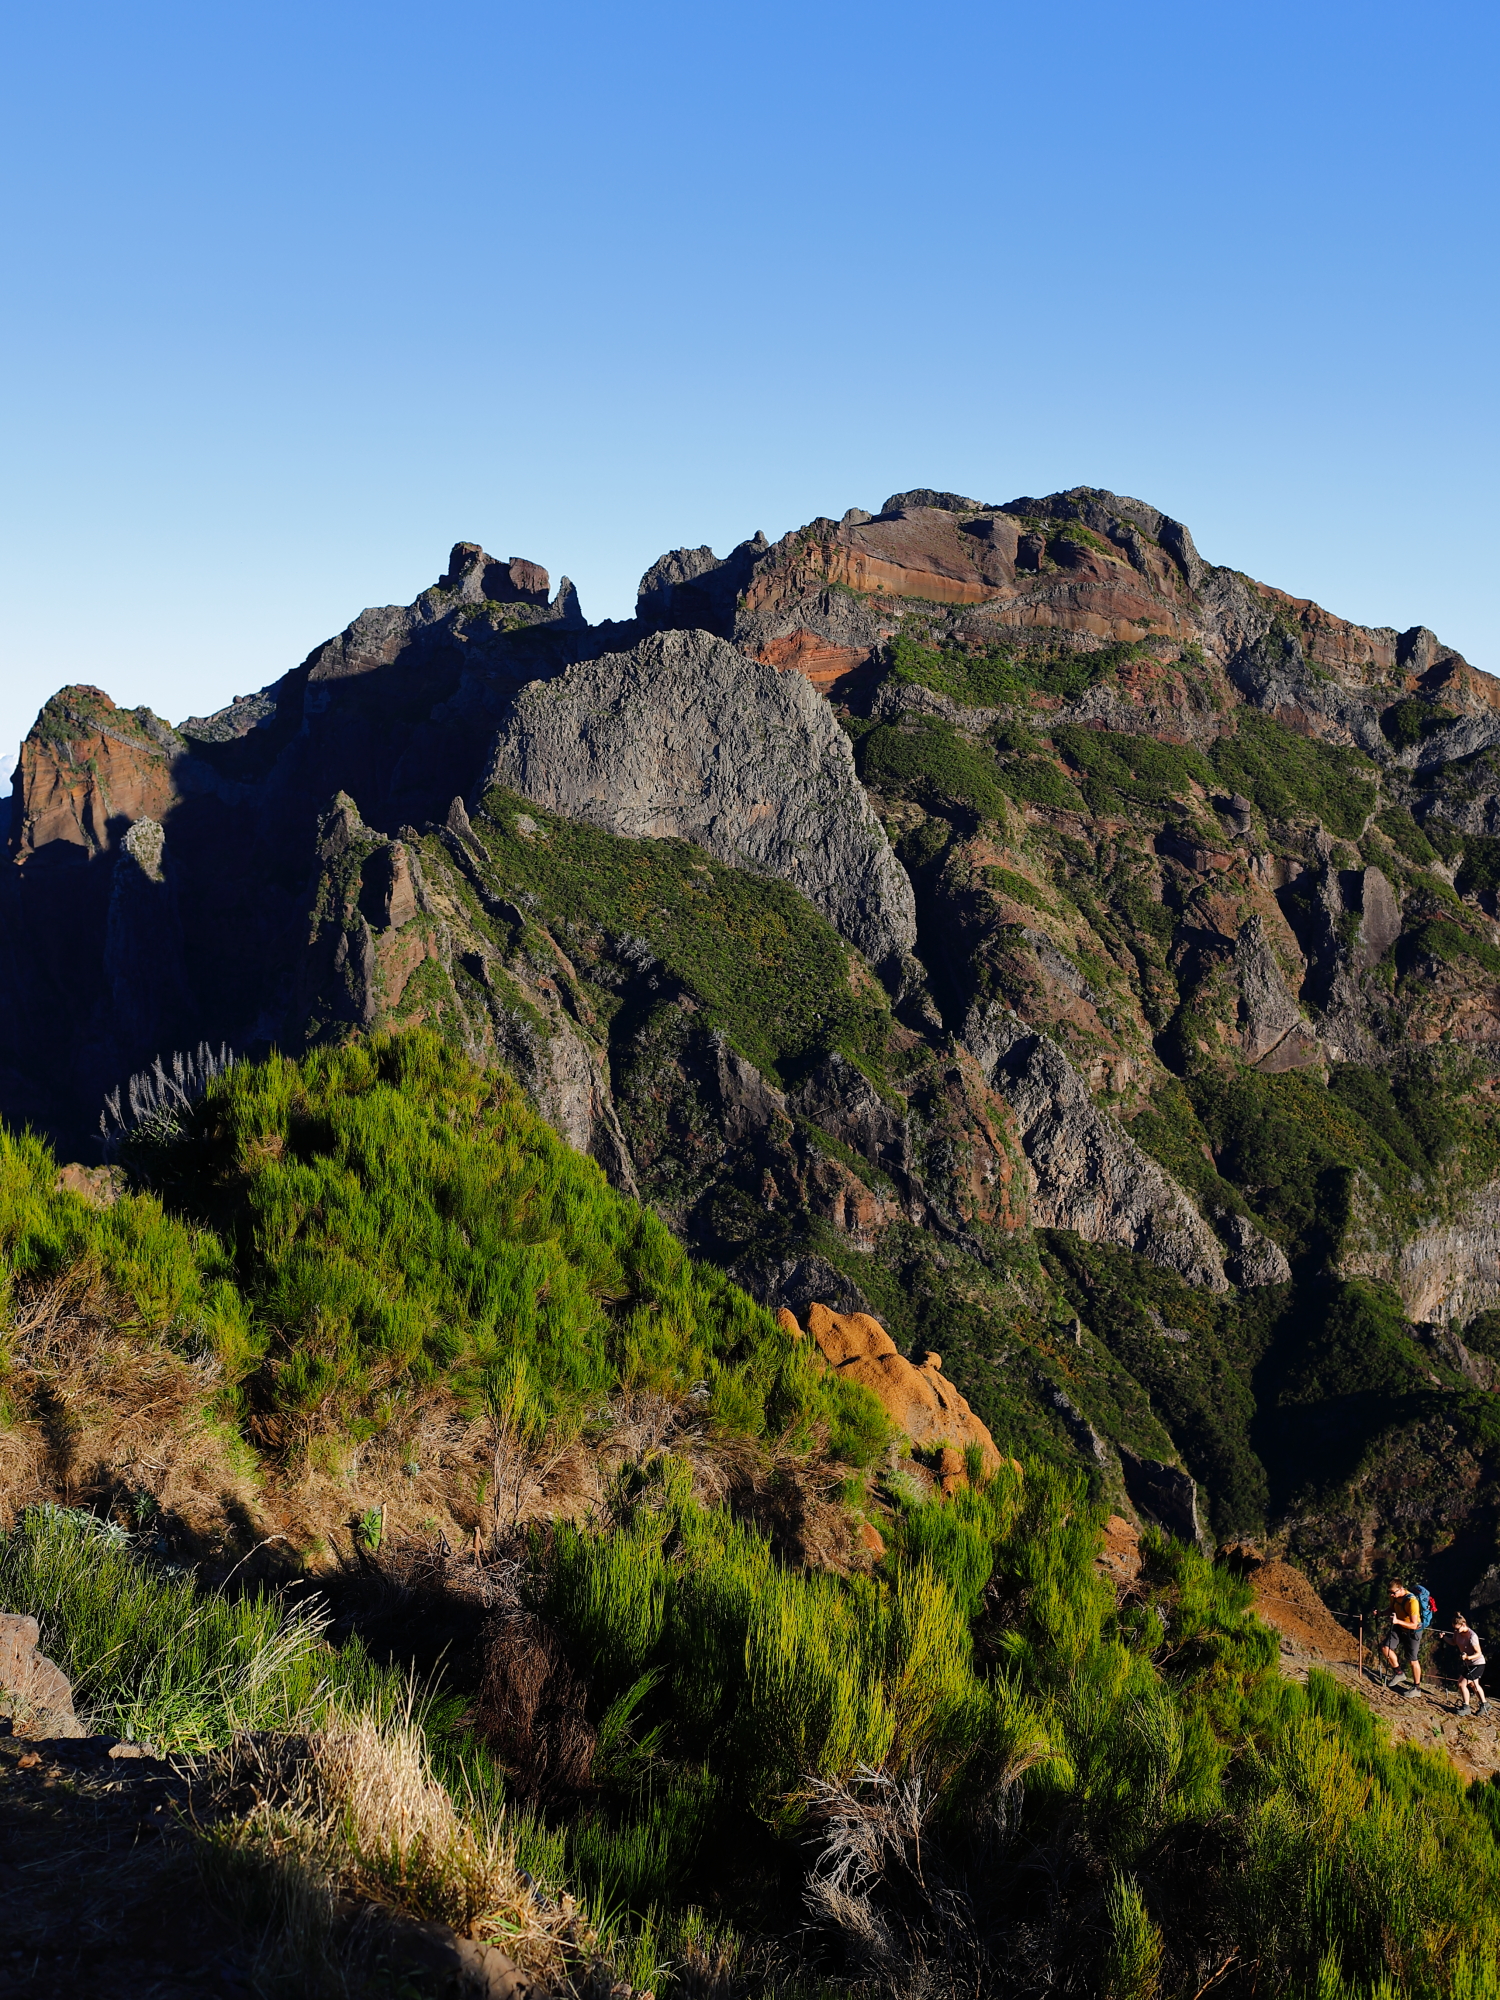 Szlak z Pico do Areeiro na Pico Ruivo